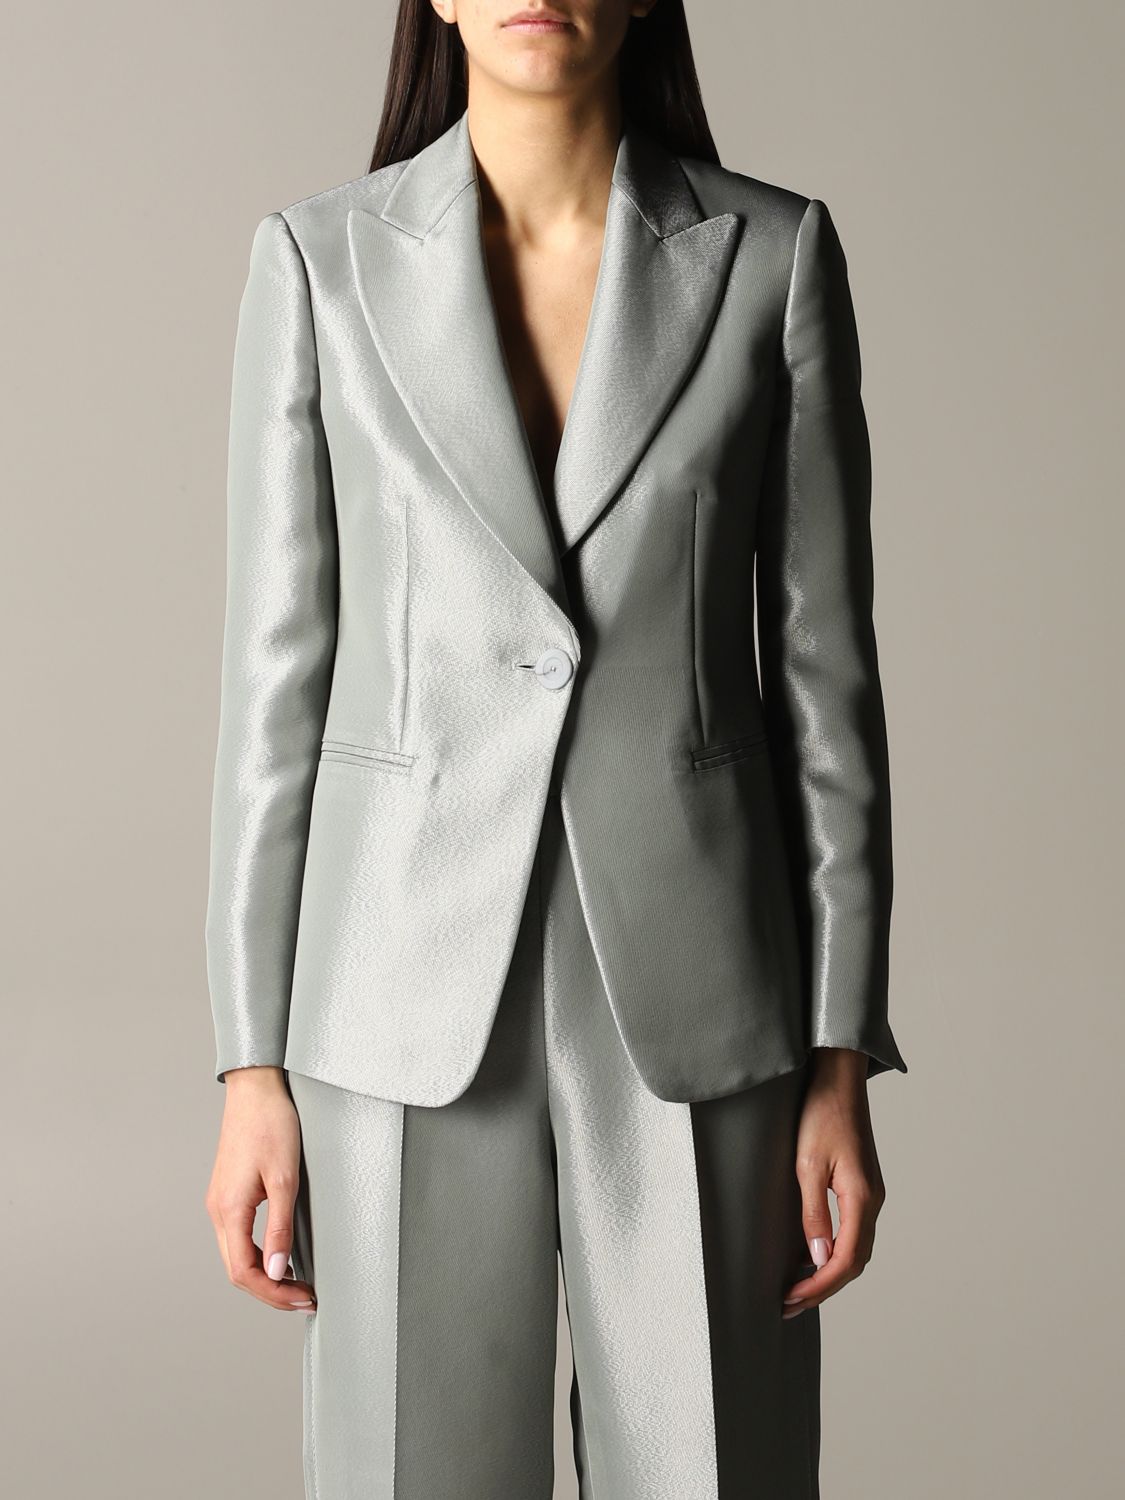 gray armani suit